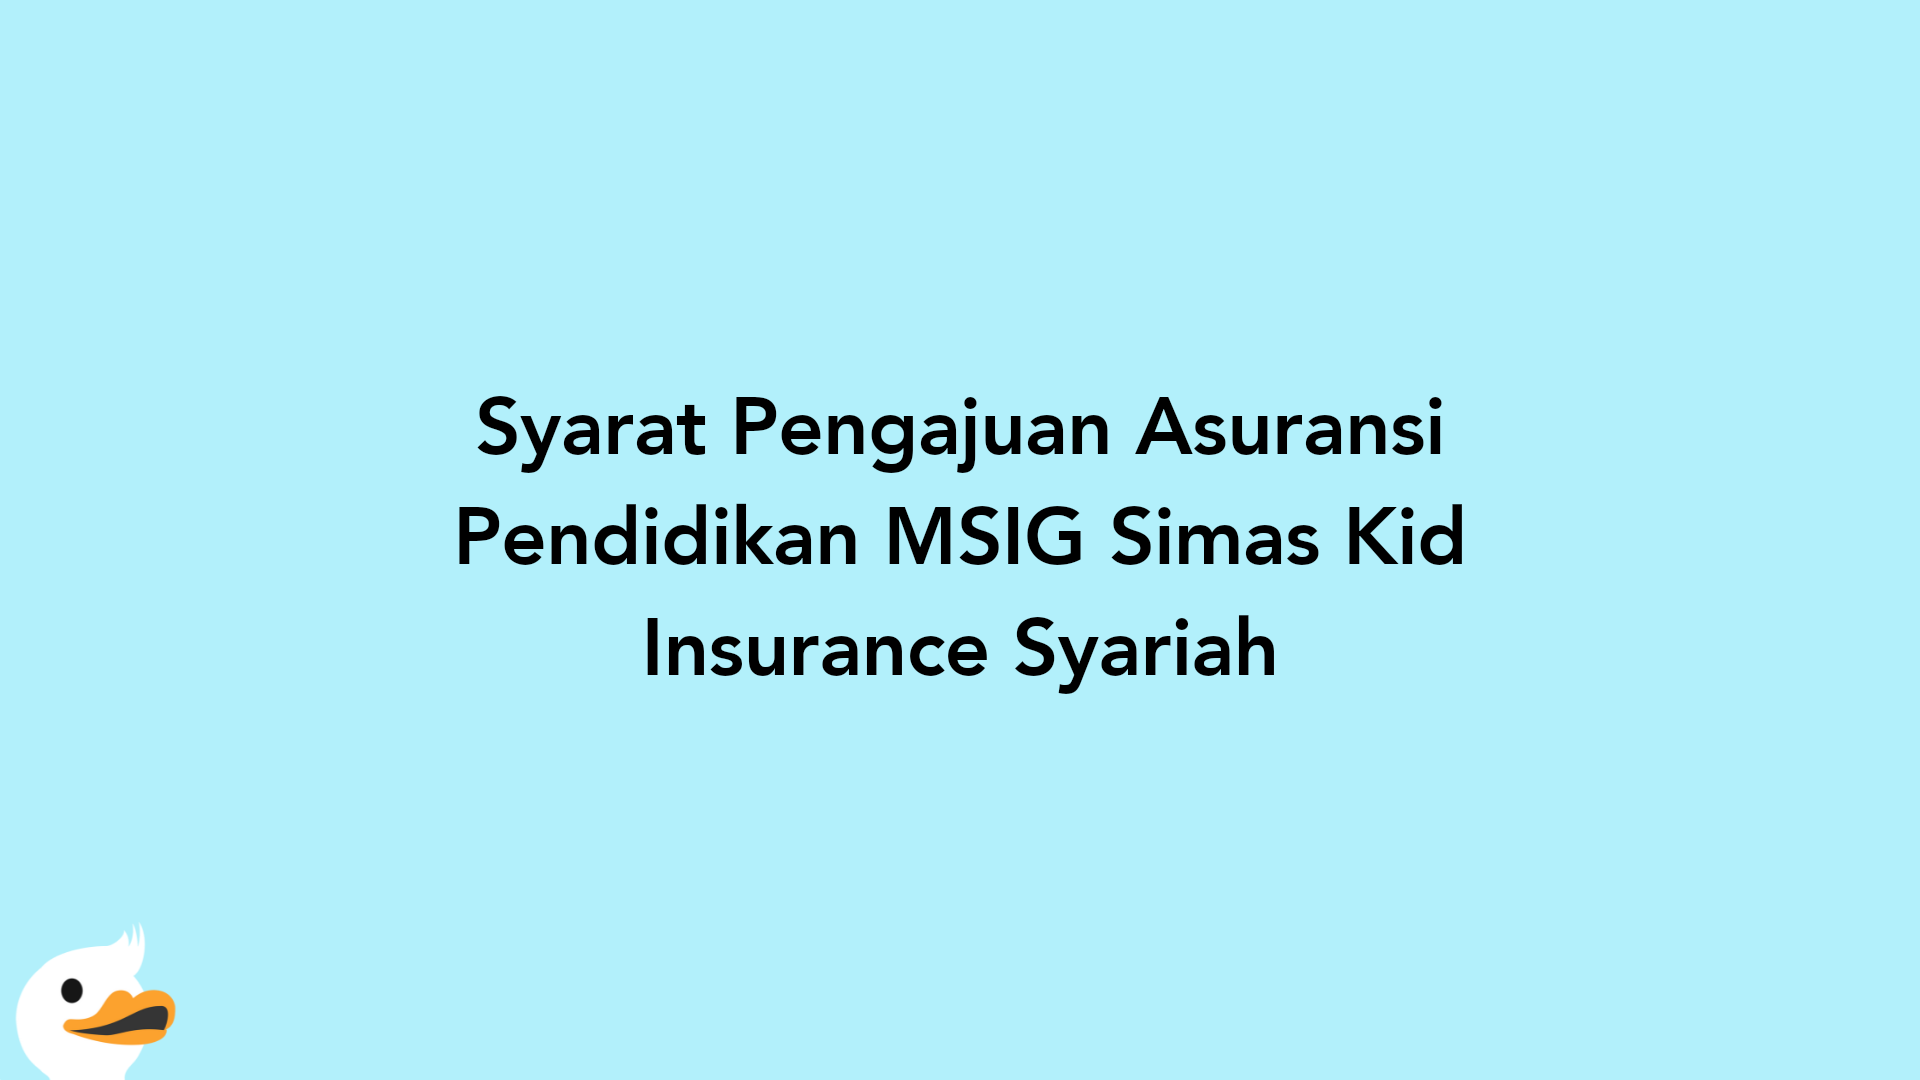 Syarat Pengajuan Asuransi Pendidikan MSIG Simas Kid Insurance Syariah